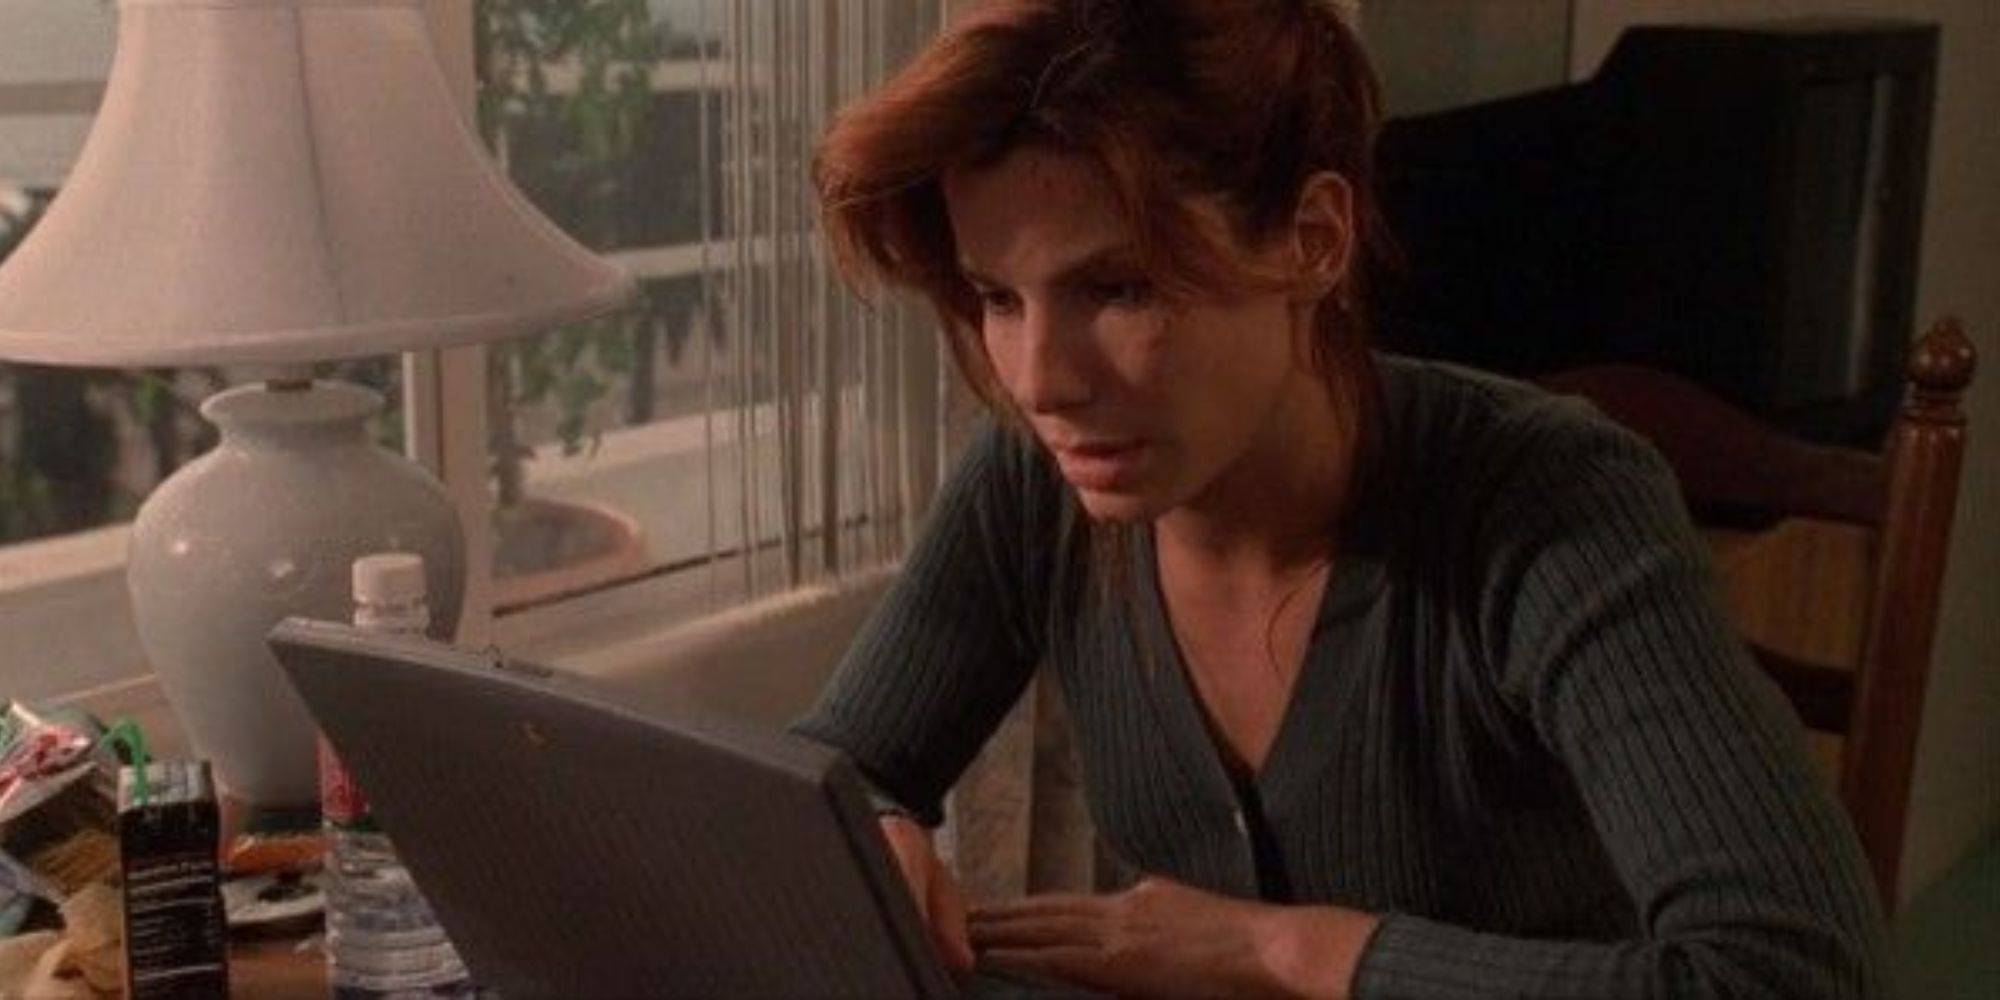 Sandra Bullock looks at a laptop